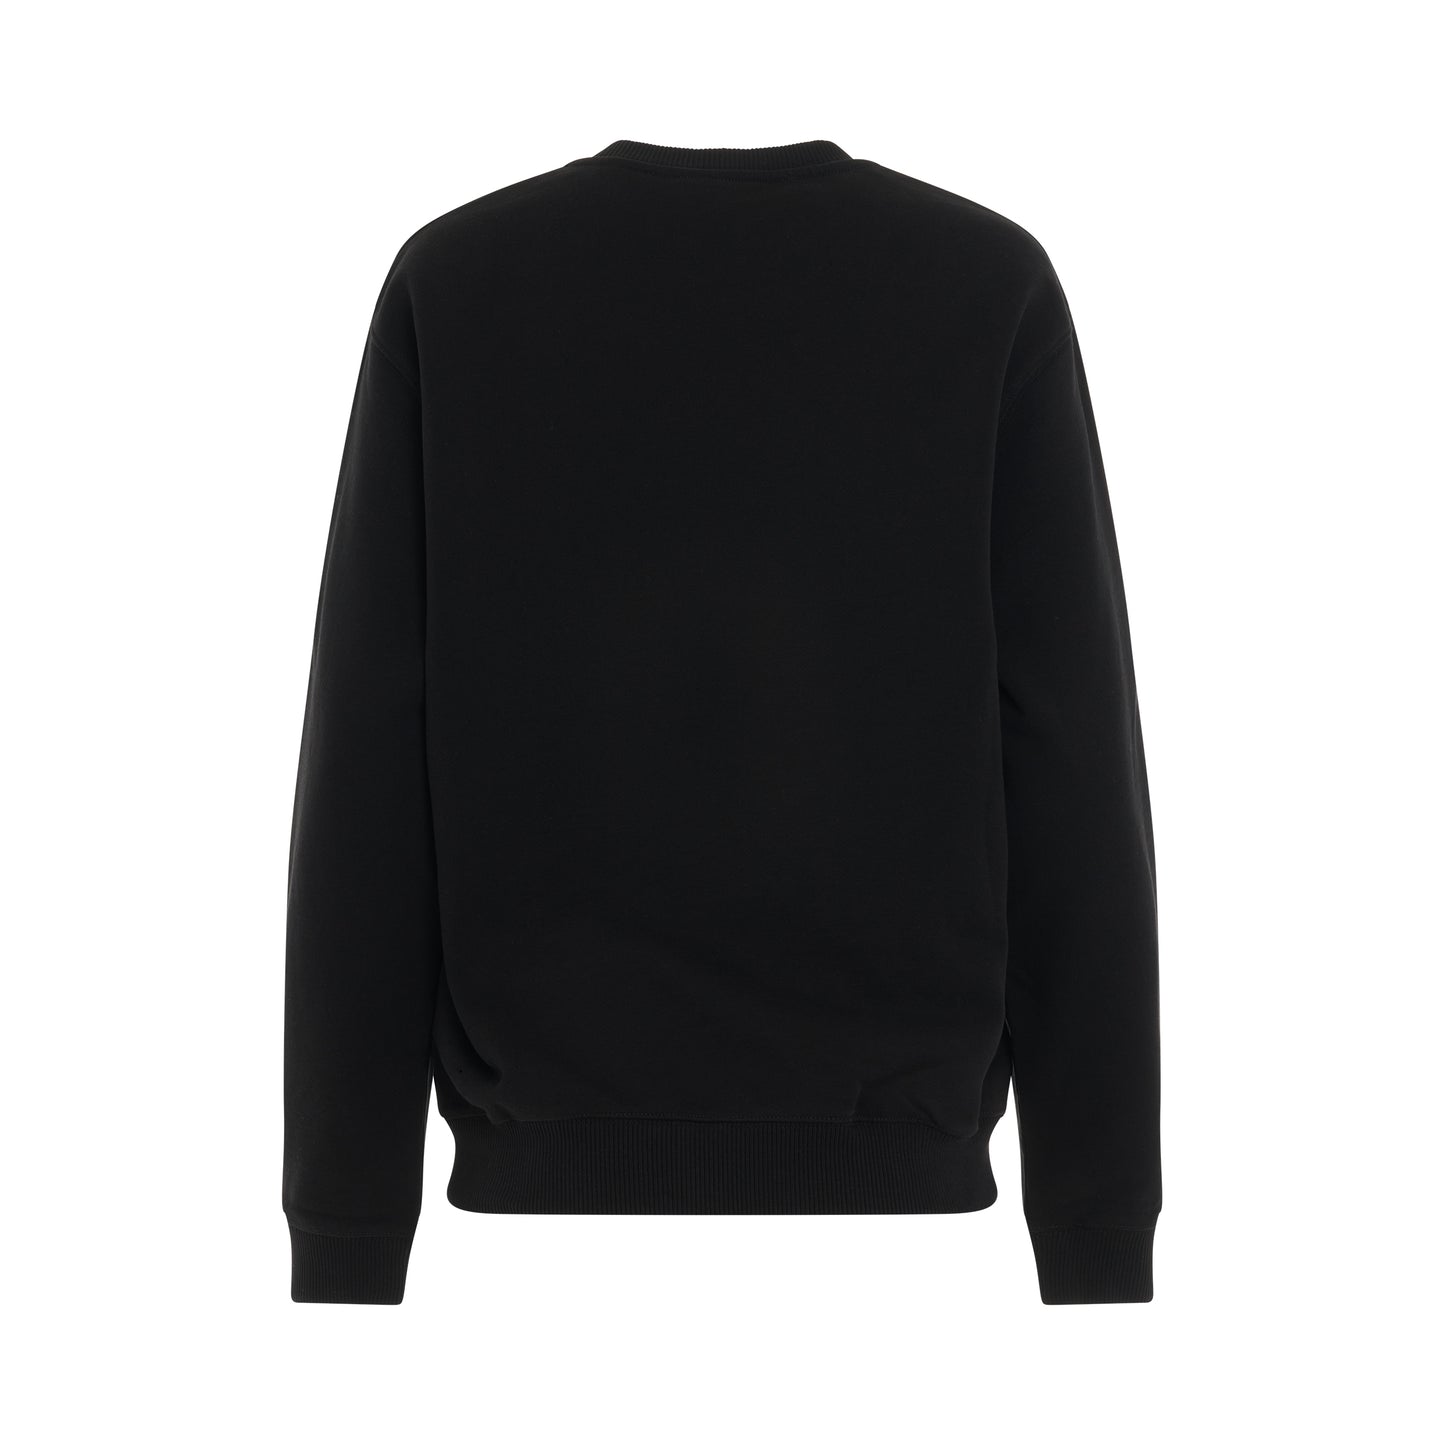 Bookish Regular Crewneck Sweatshirt in Black/White